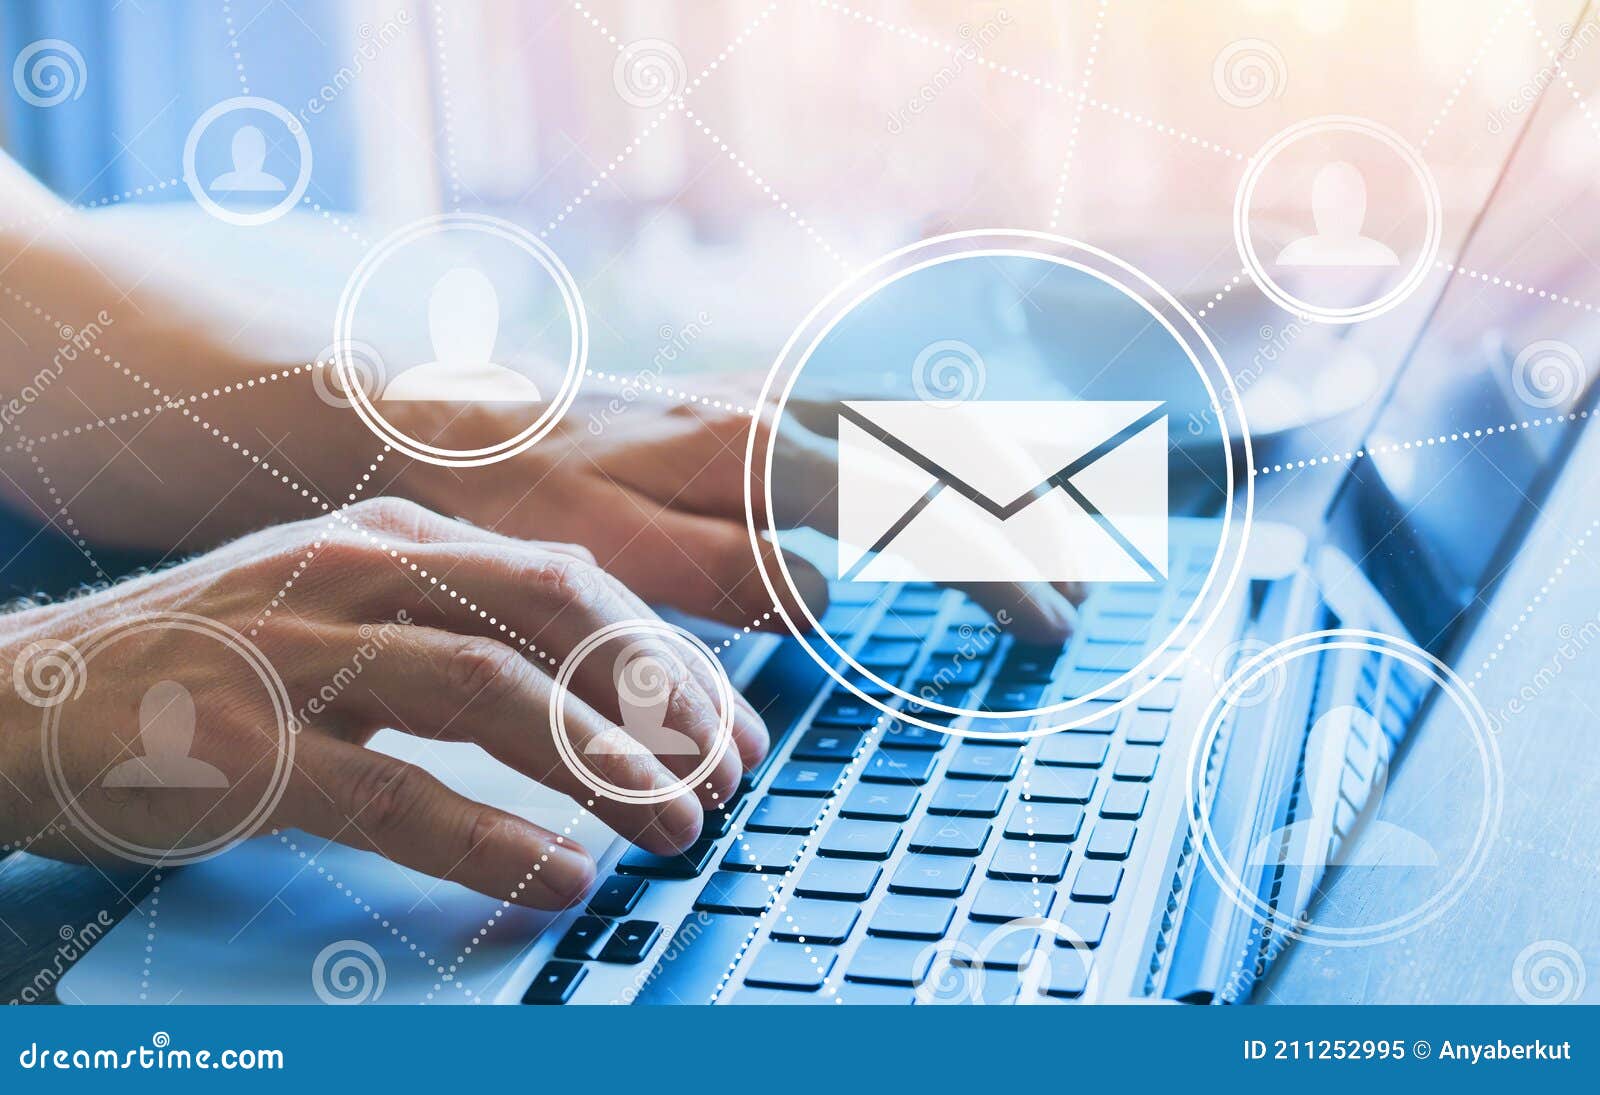 email marketing concept, send newsletter